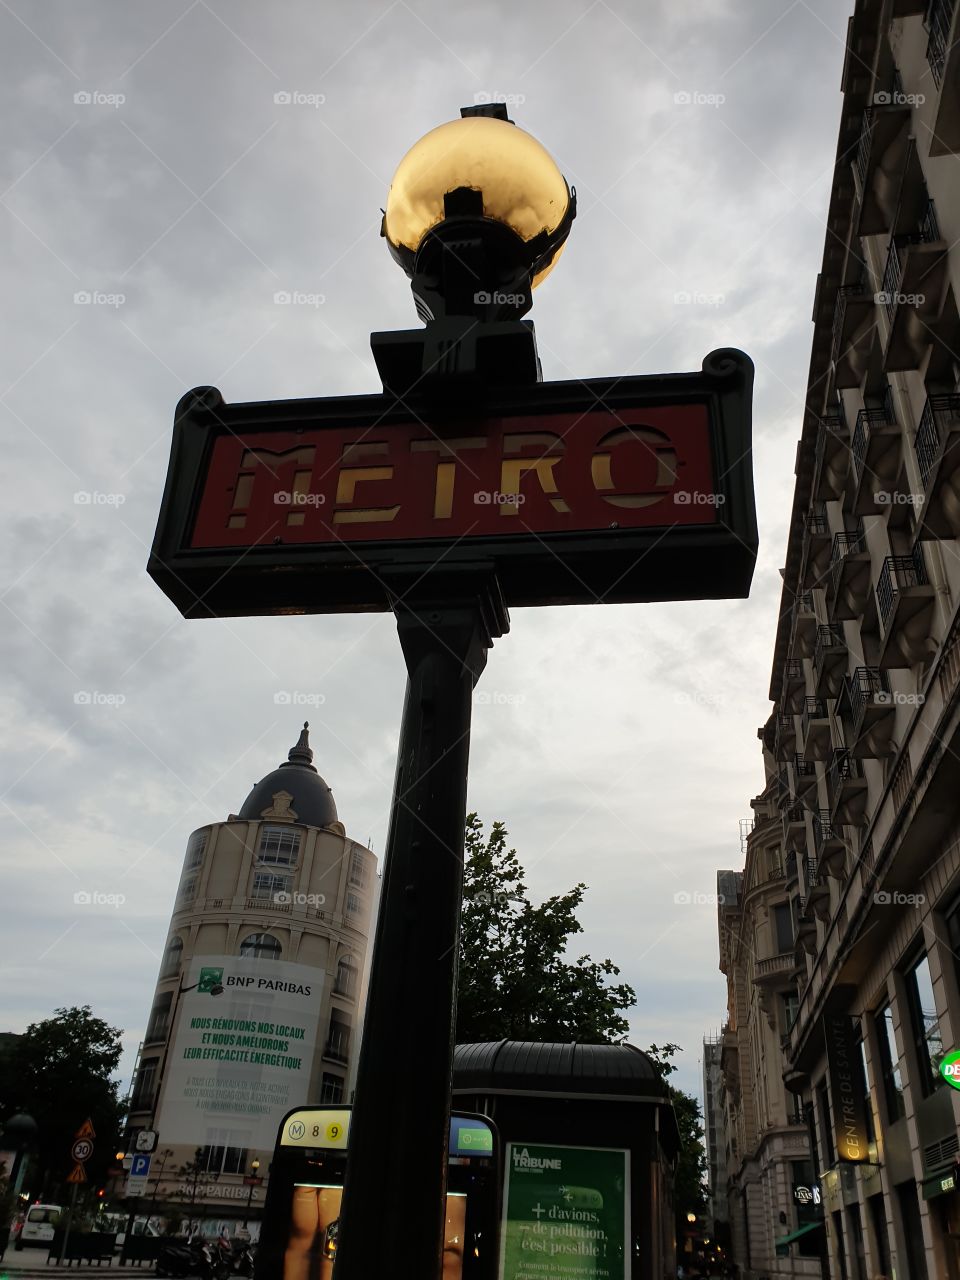 Metro station sign Paris France